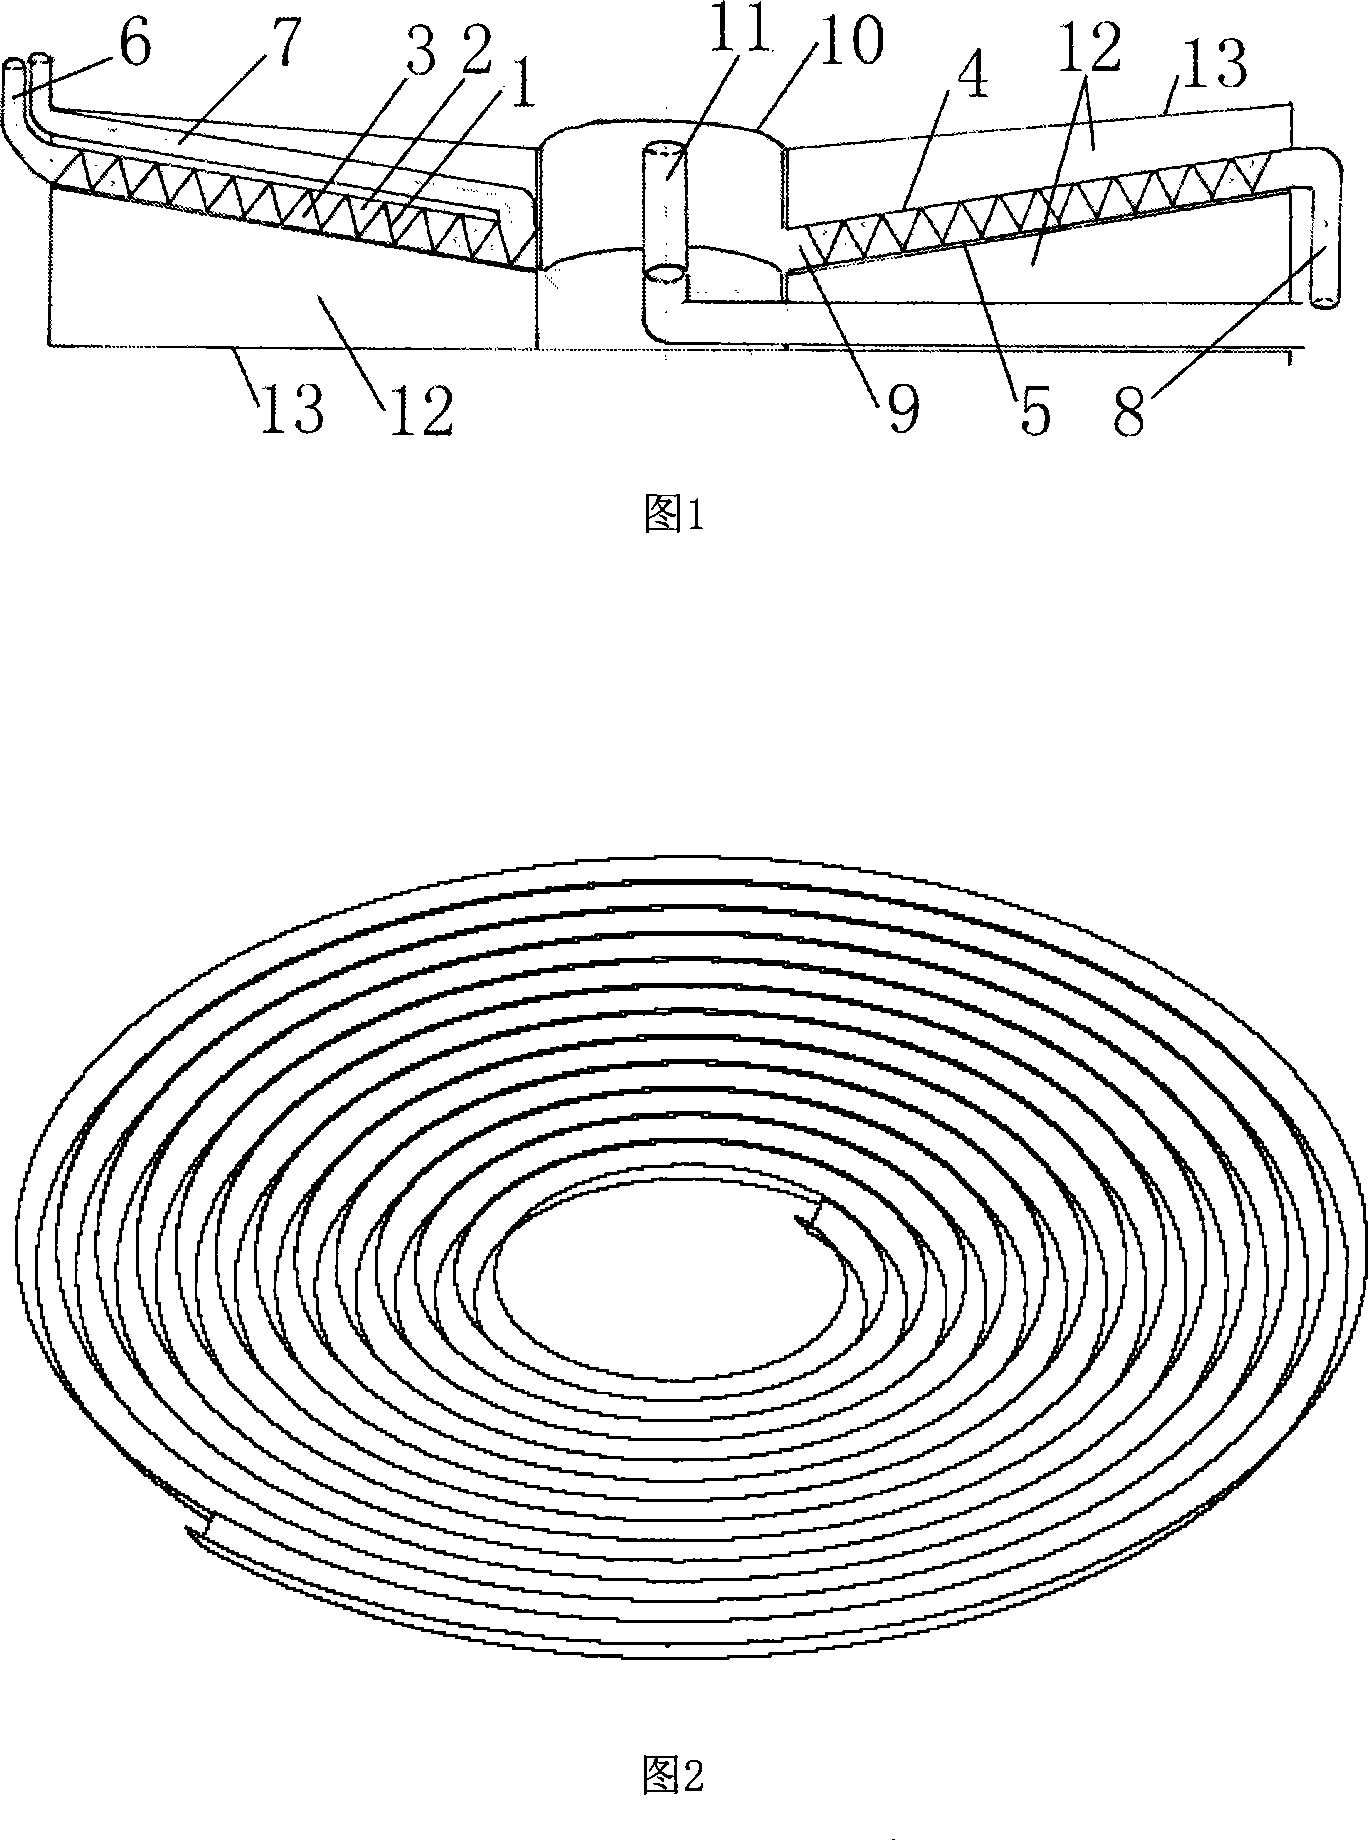 Novel slab type spiral heat exchanger